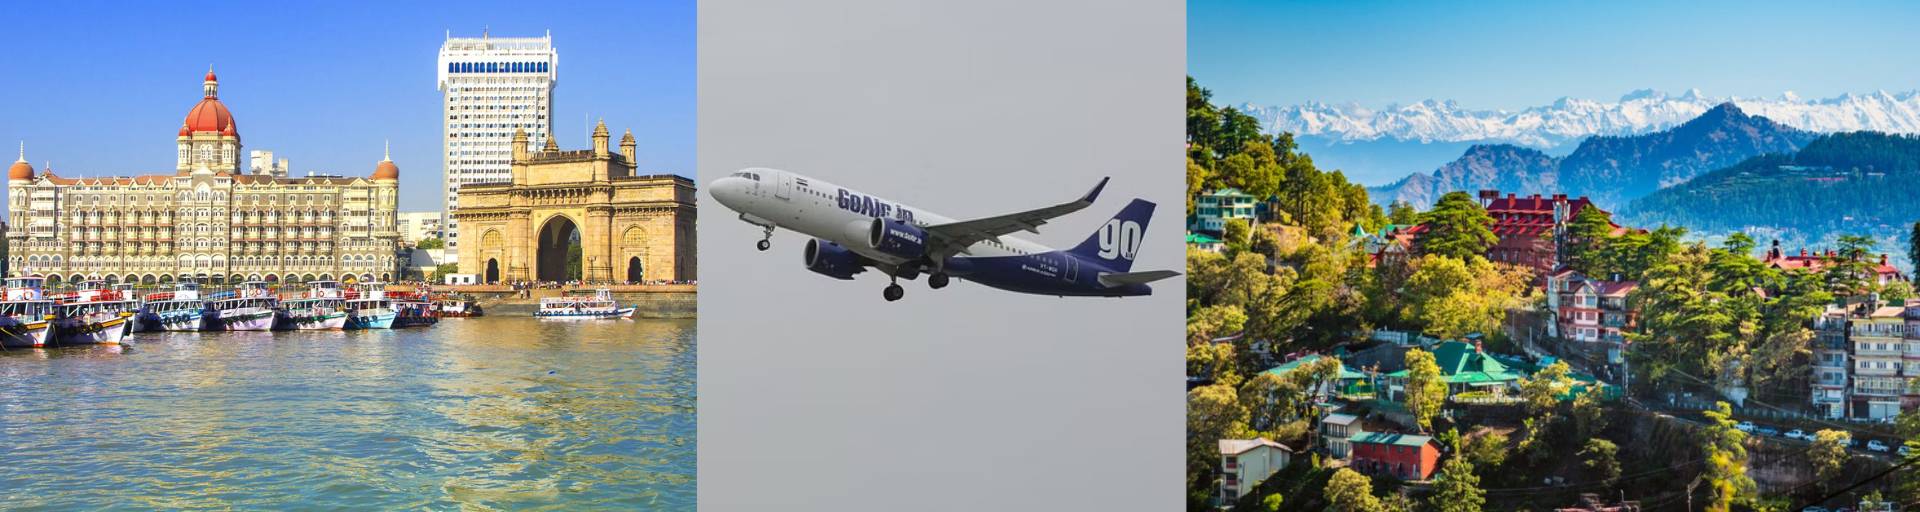 Shimla_Manali_Tour_Package_flight_from_Mumbai_header_image